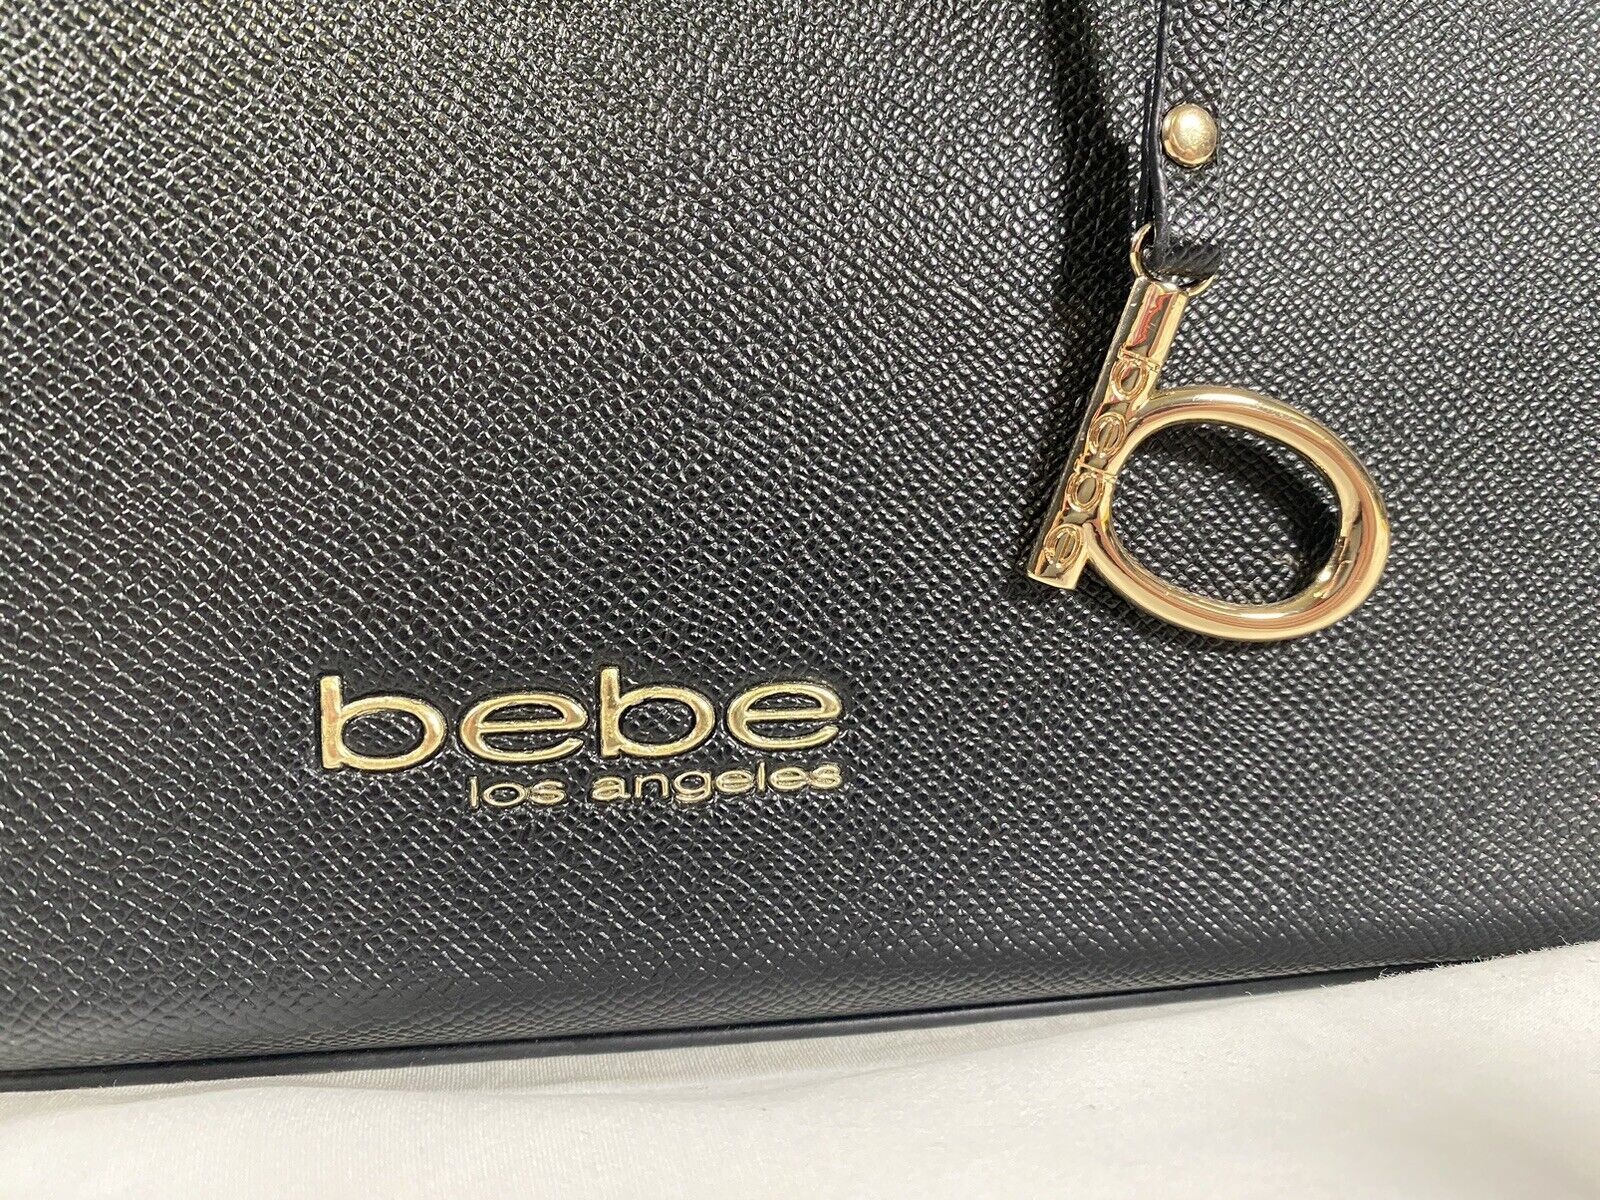 Bebe Evie Small Black Satchel Bag - image 7